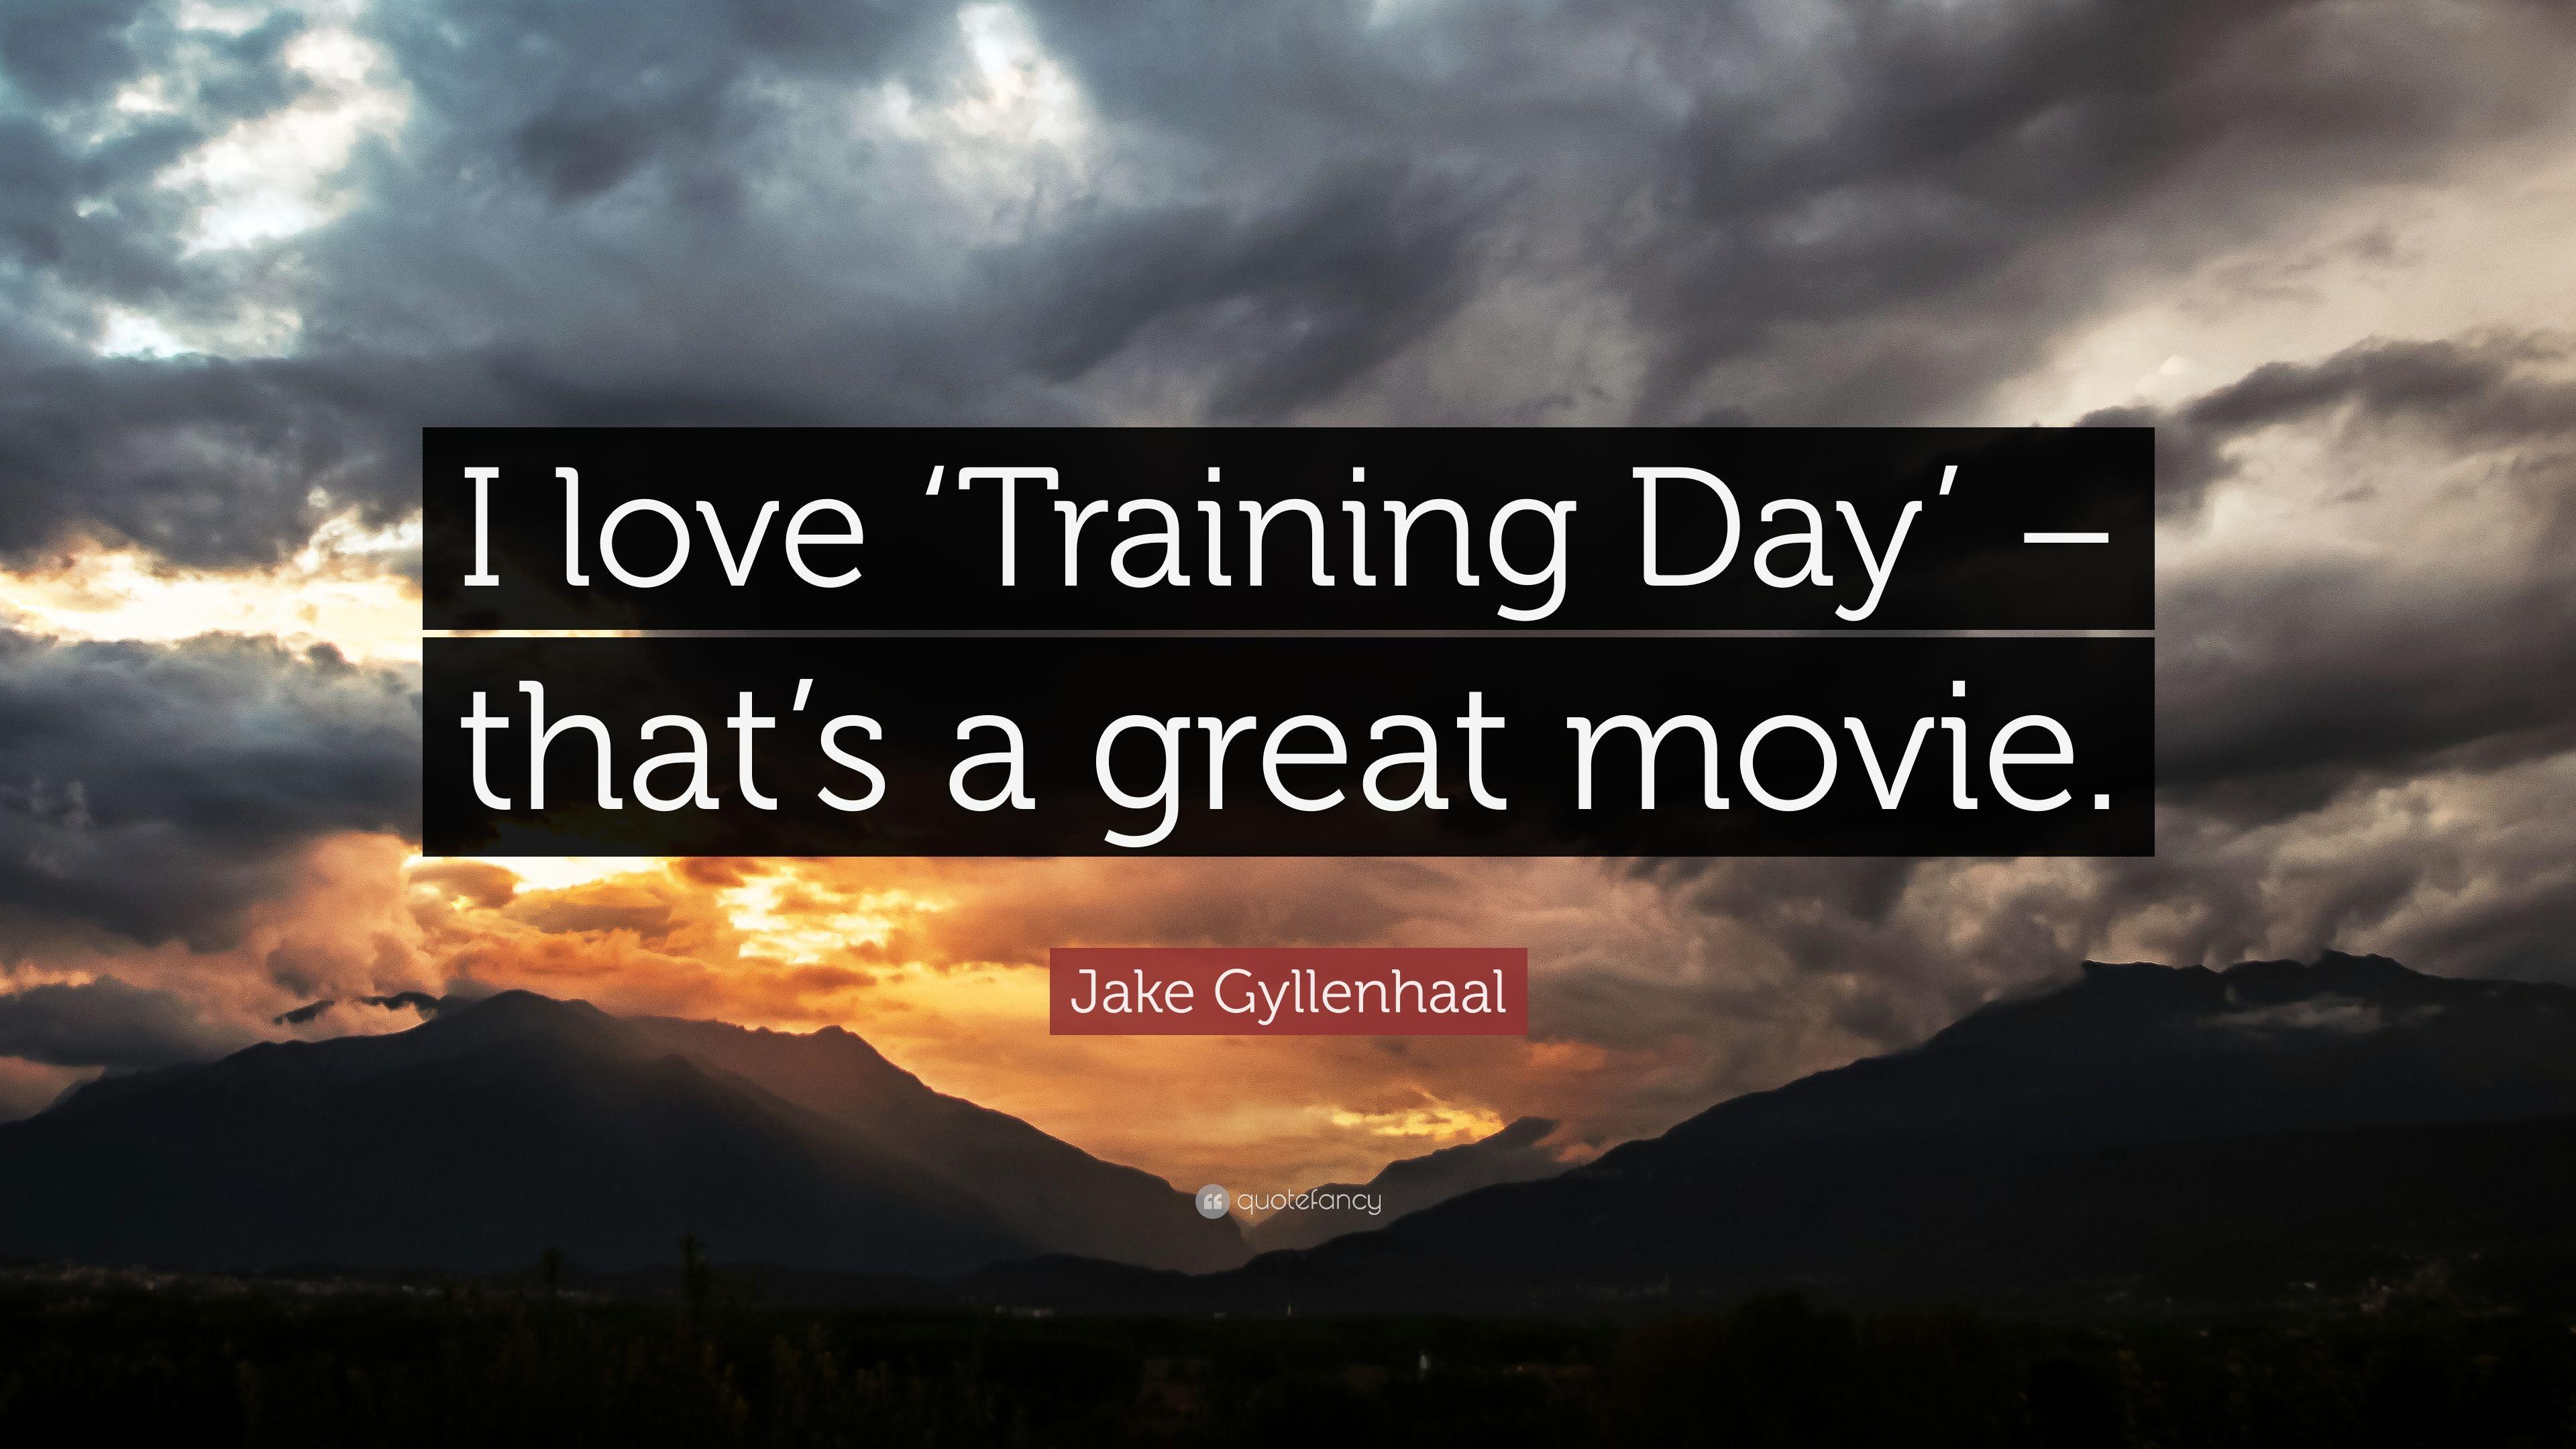 Jake Gyllenhaal Quote: “I love 'Training Day'